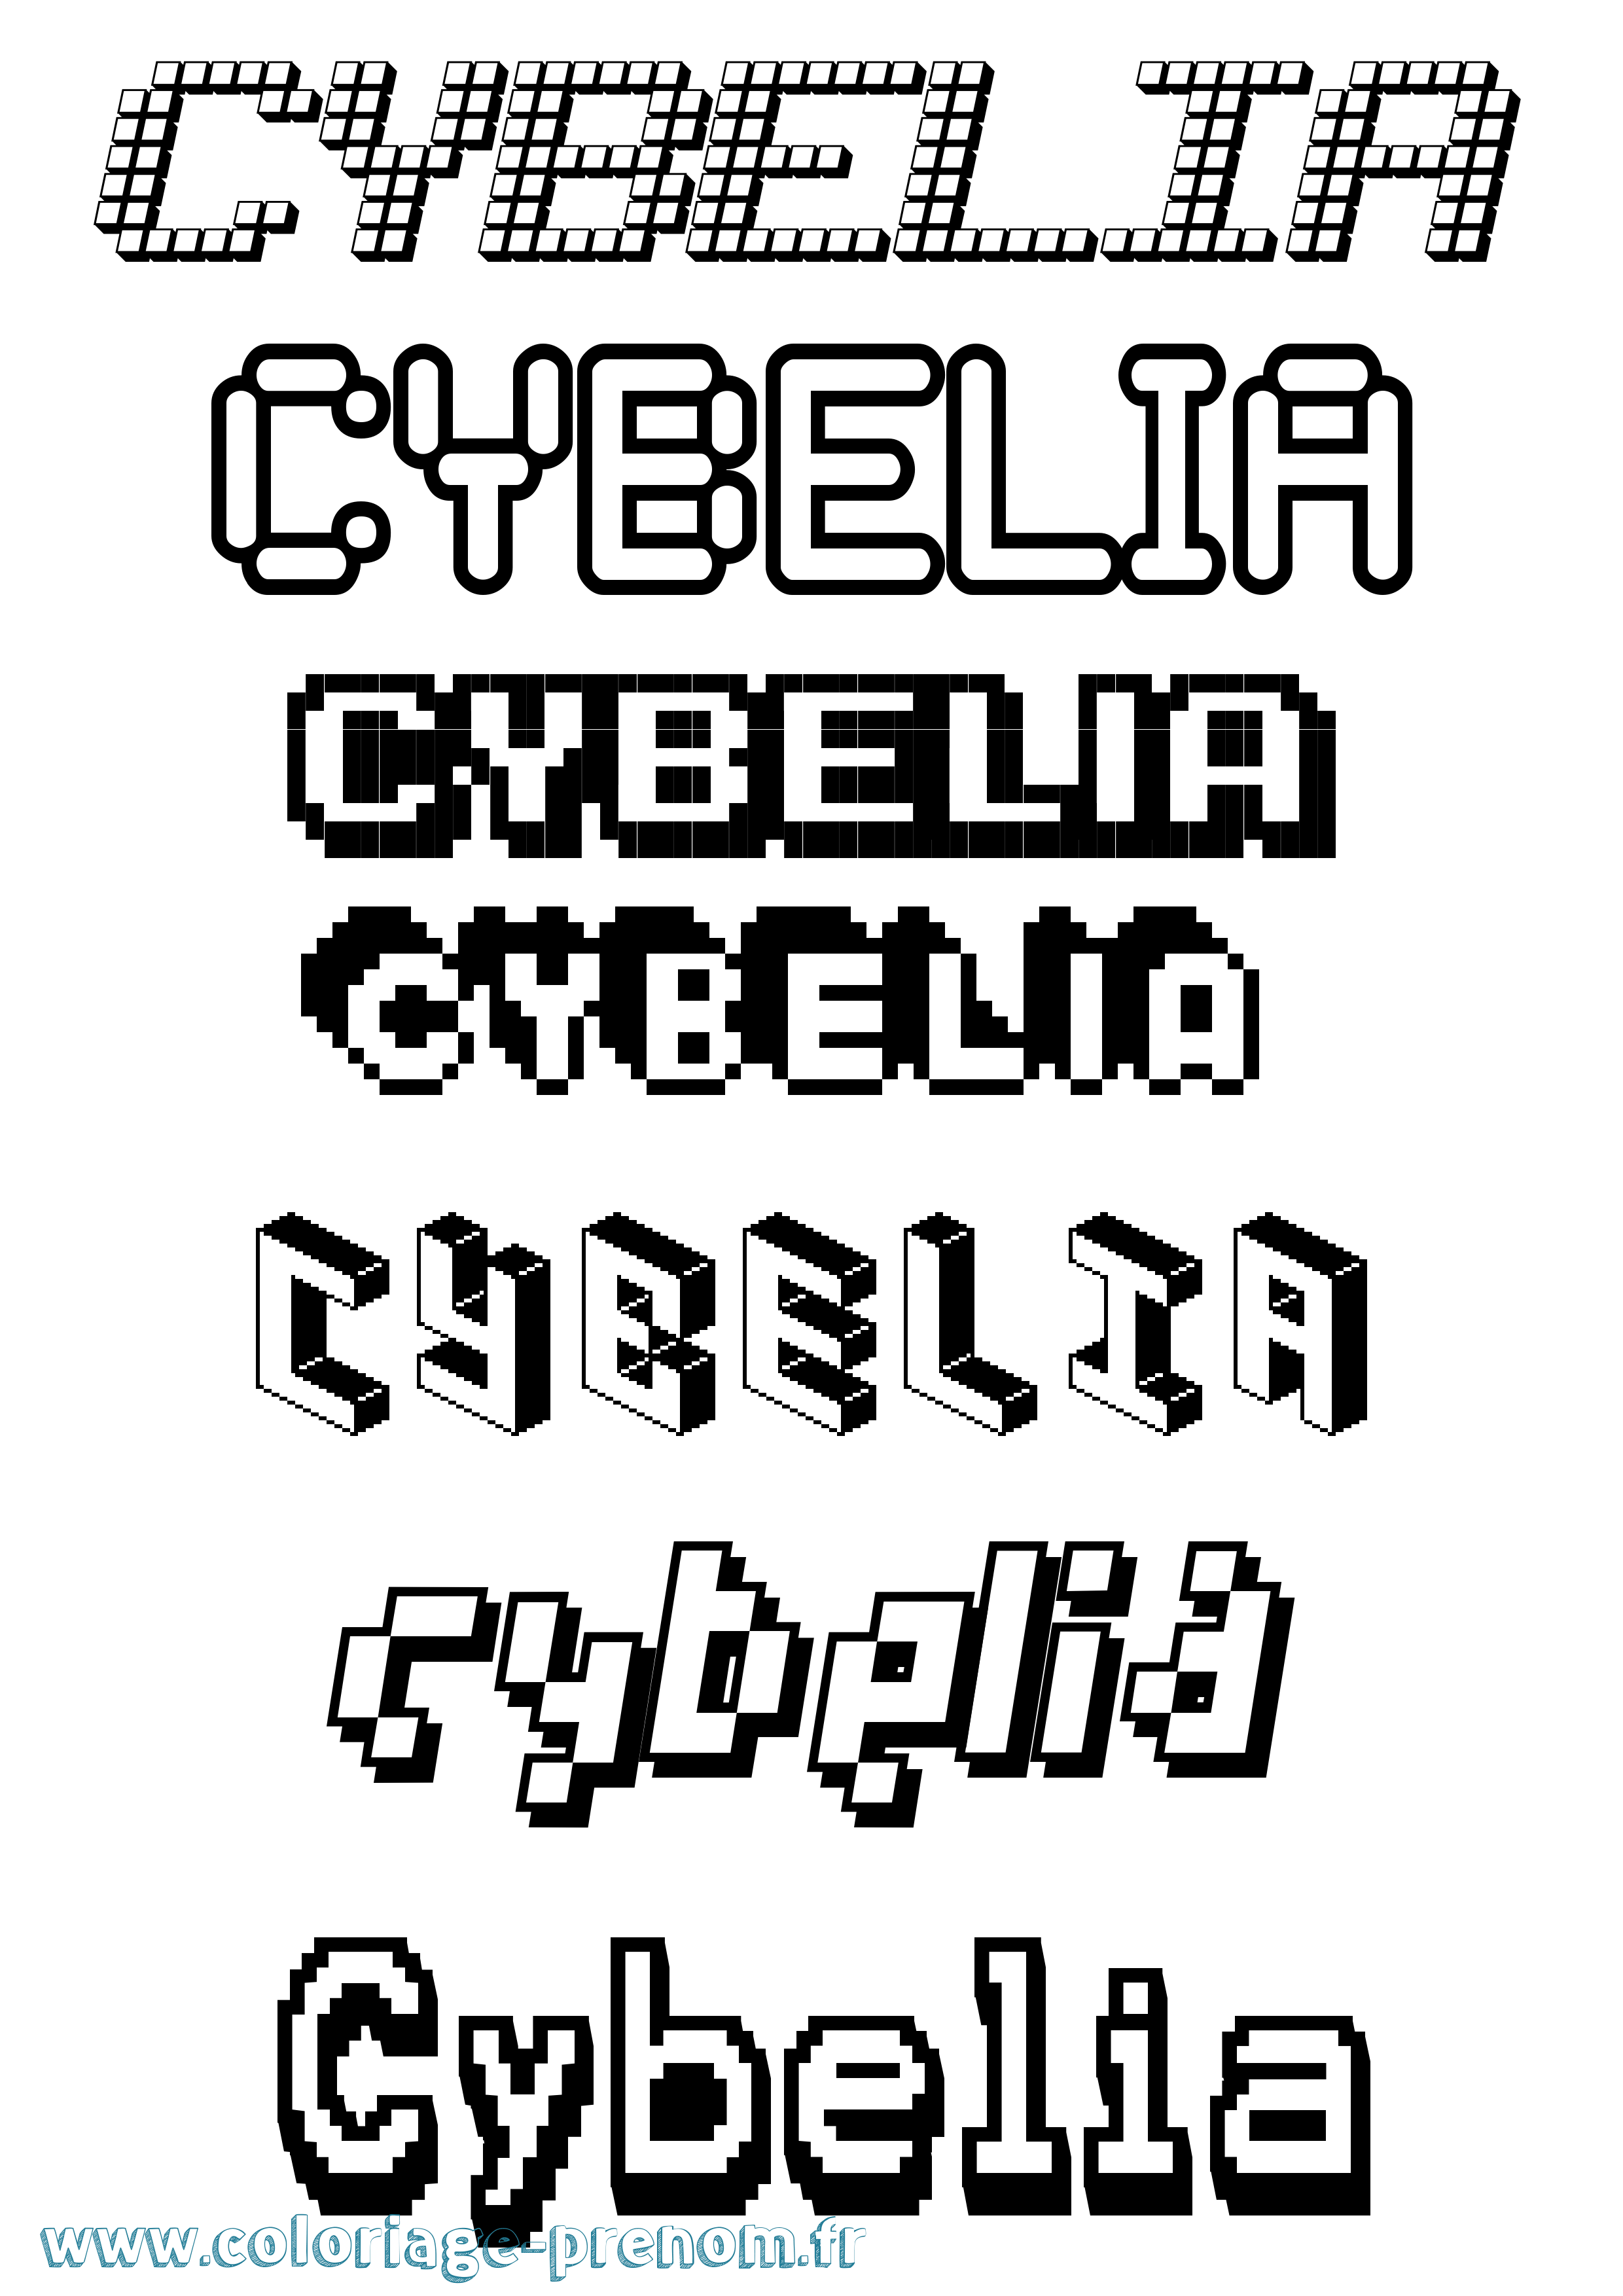 Coloriage prénom Cybelia Pixel